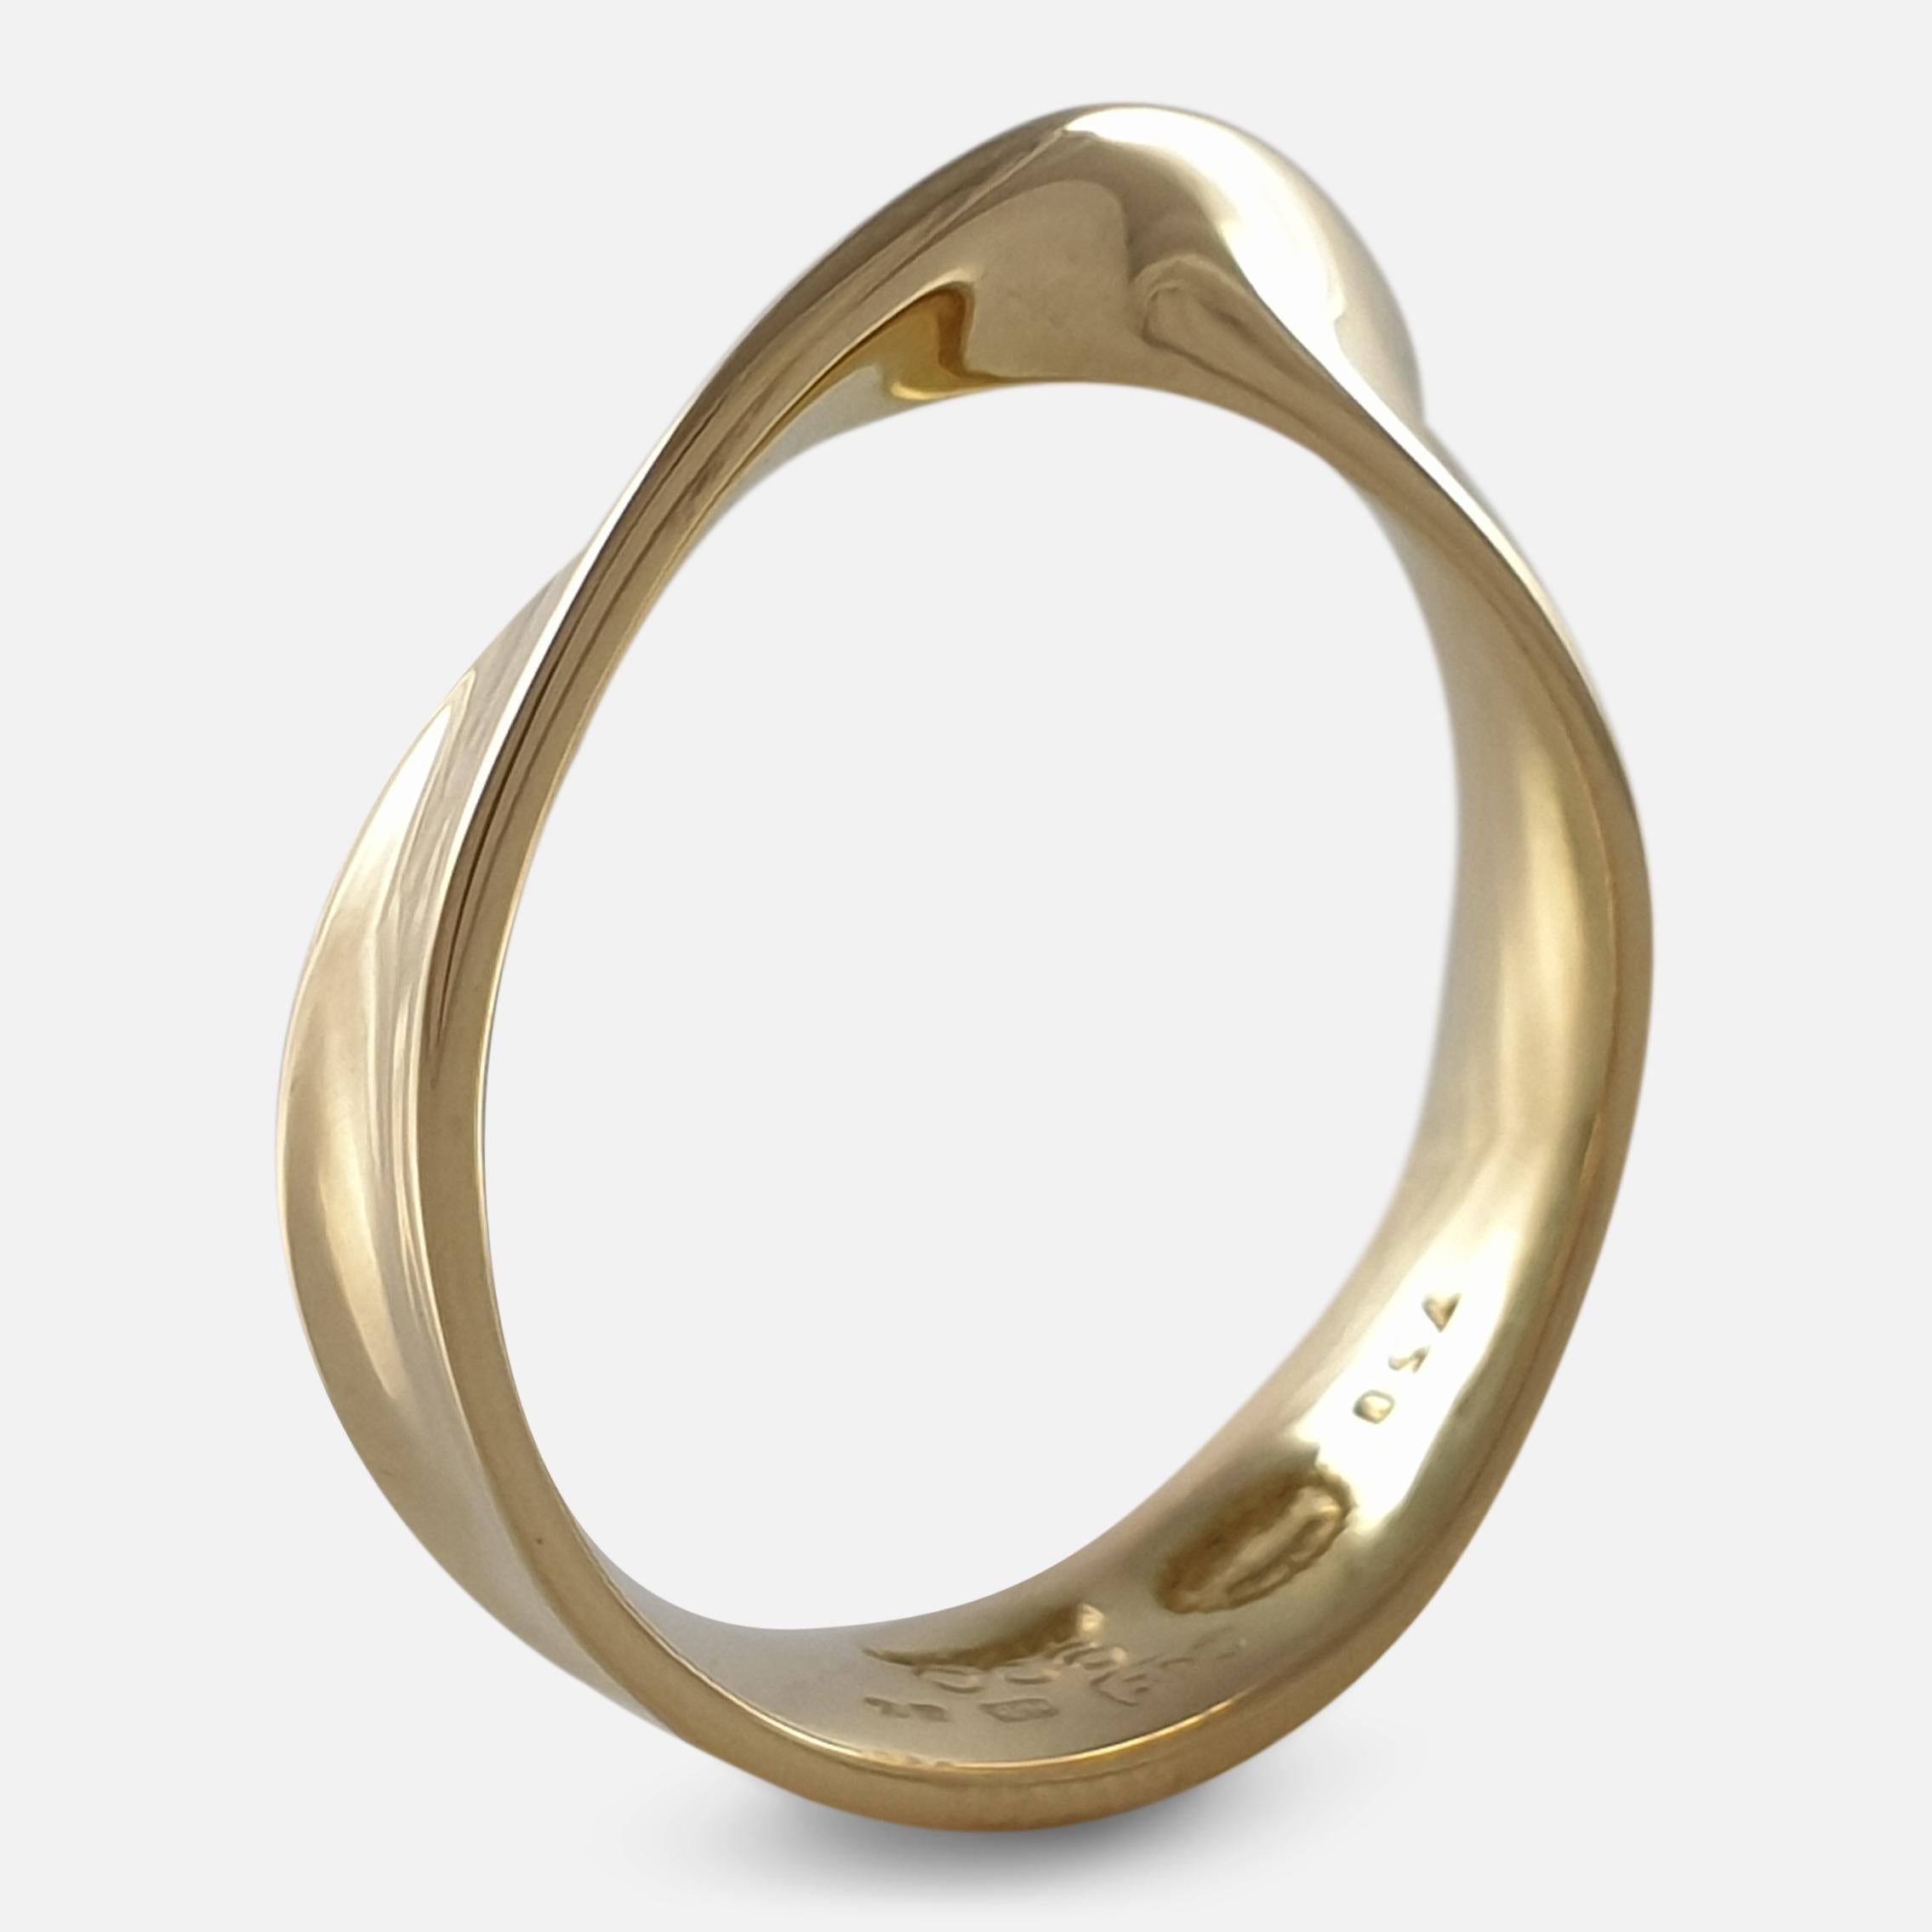 Modernist 18 Carat Yellow Gold MÖBIUS Ring, No. 900, Georg Jensen